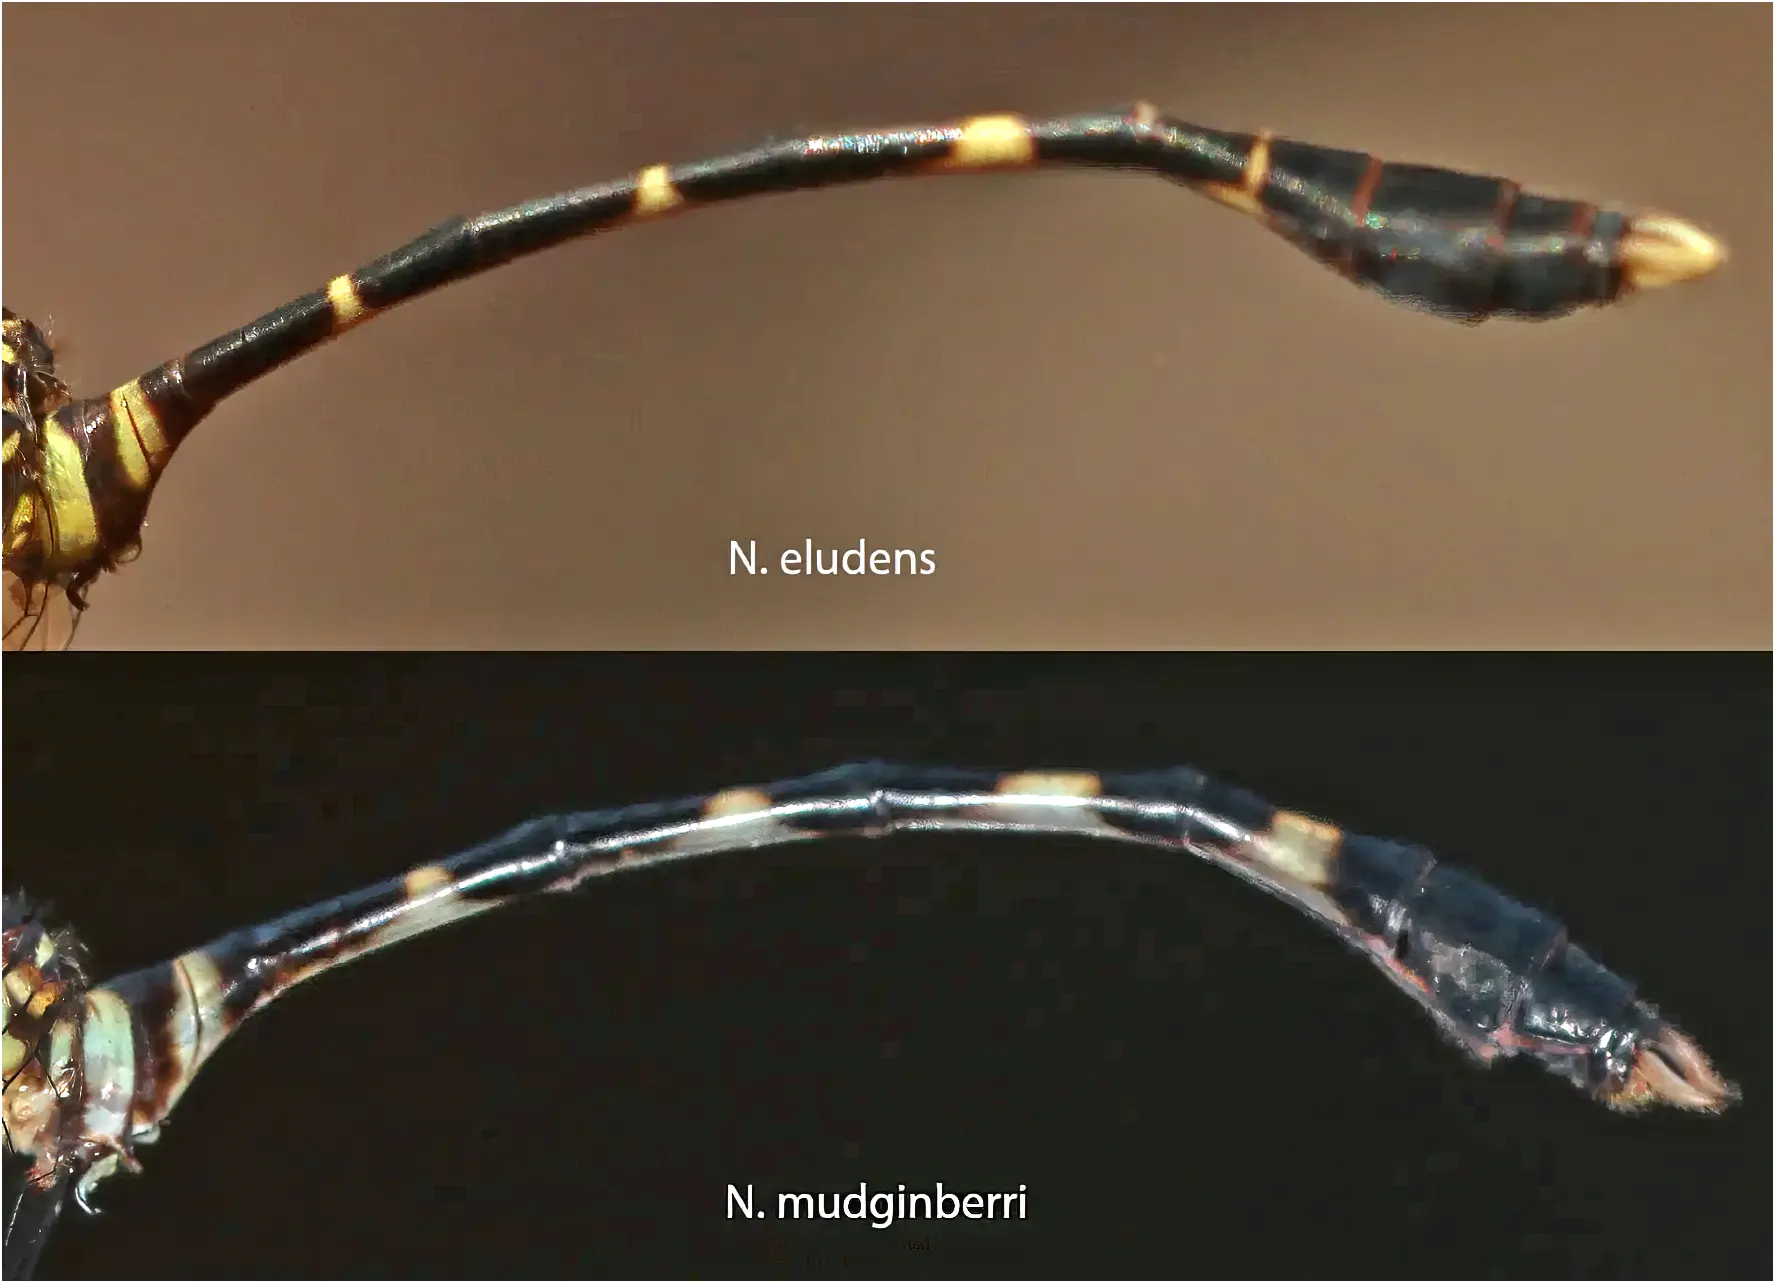 Comparaison des abdomen de Nannophlebia eludens et mudginberri